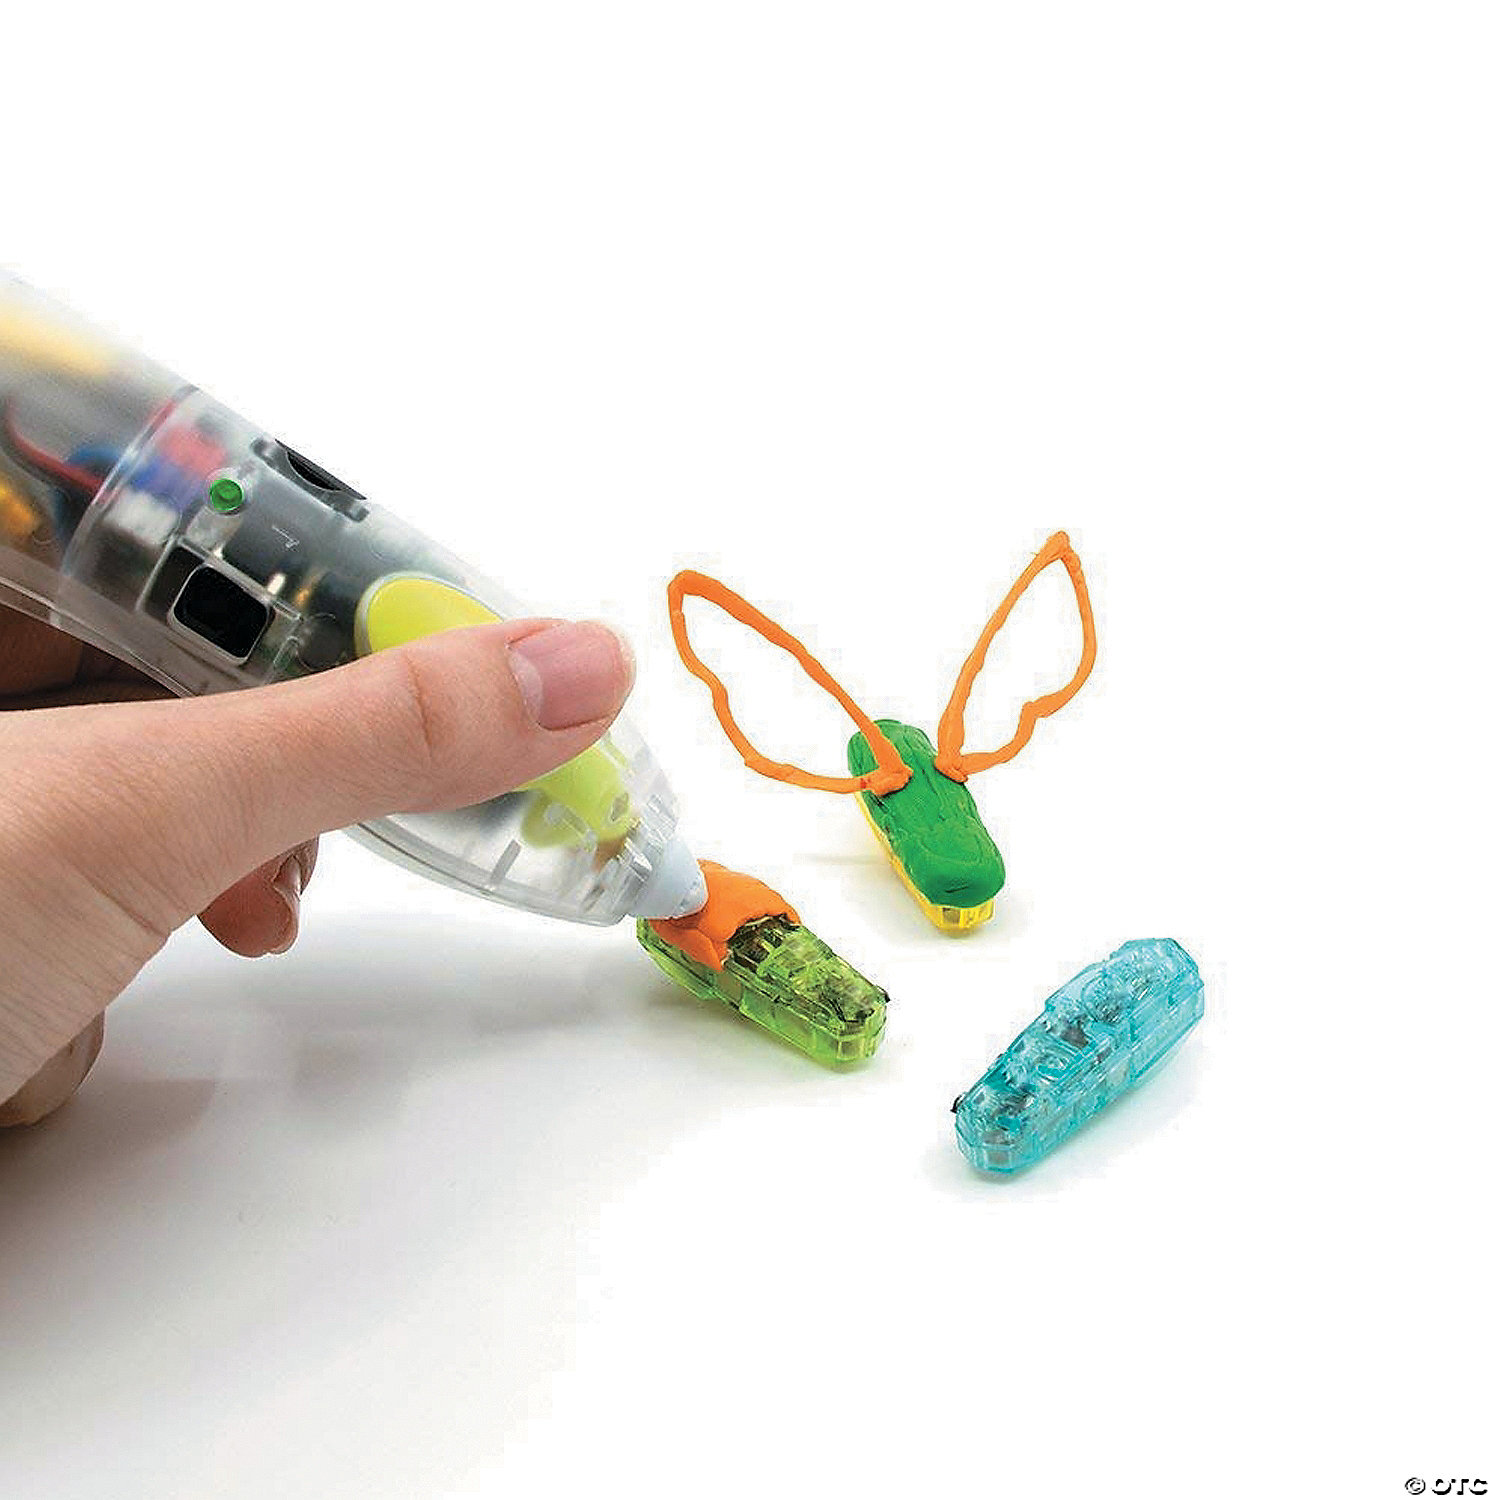 3Doodler Start Make Your Own HEXBUG Creature 3D Printing Pen Set for Kids 